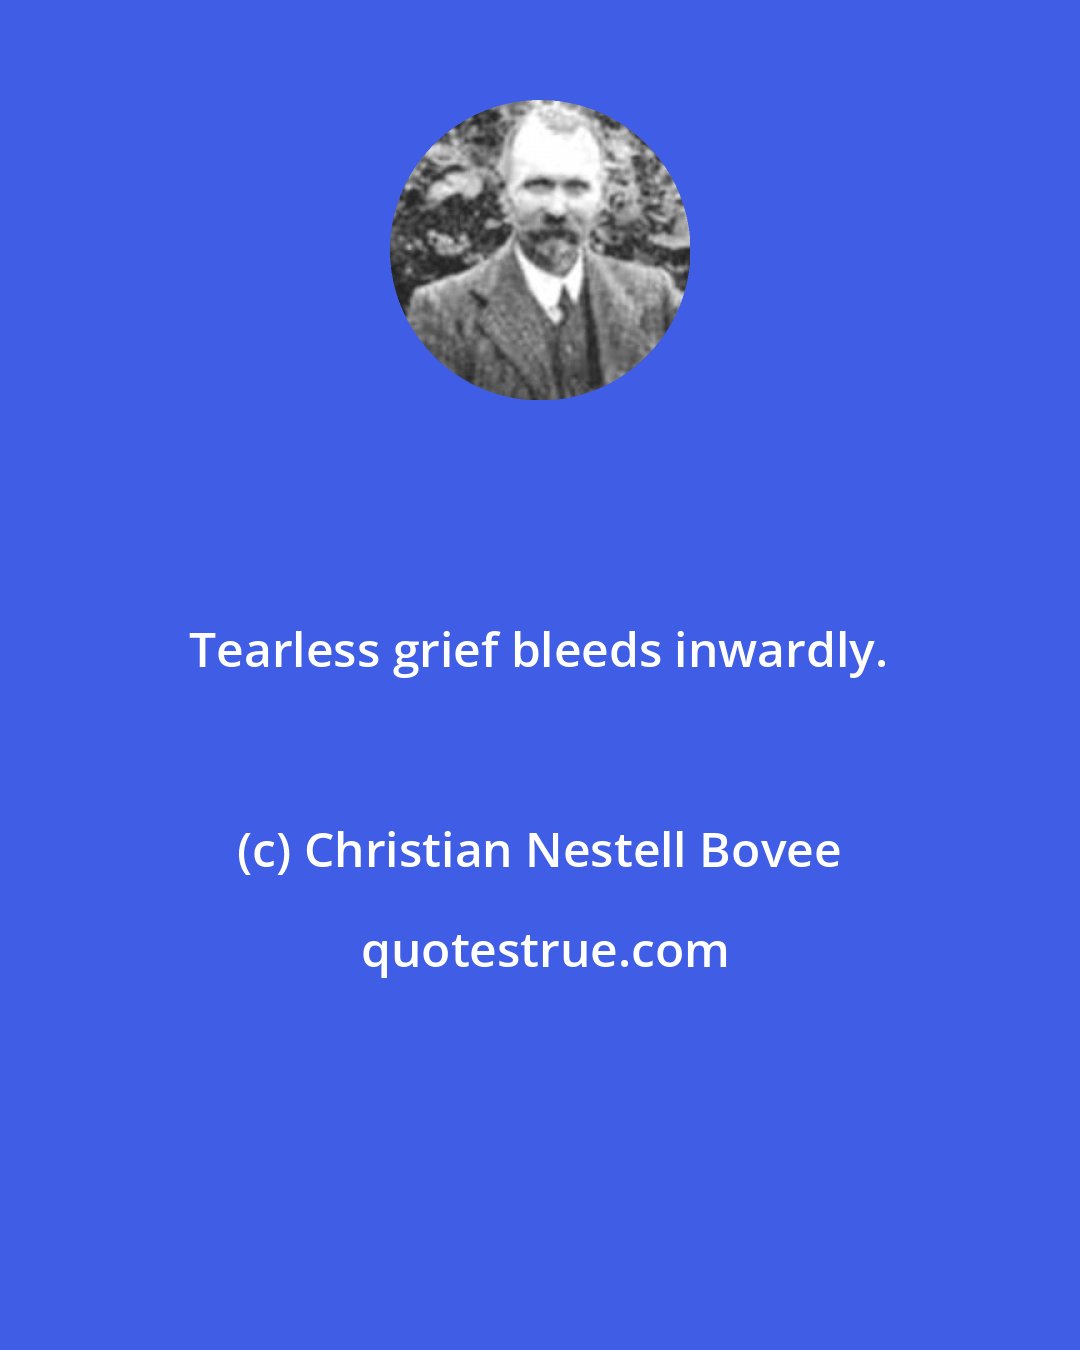 Christian Nestell Bovee: Tearless grief bleeds inwardly.